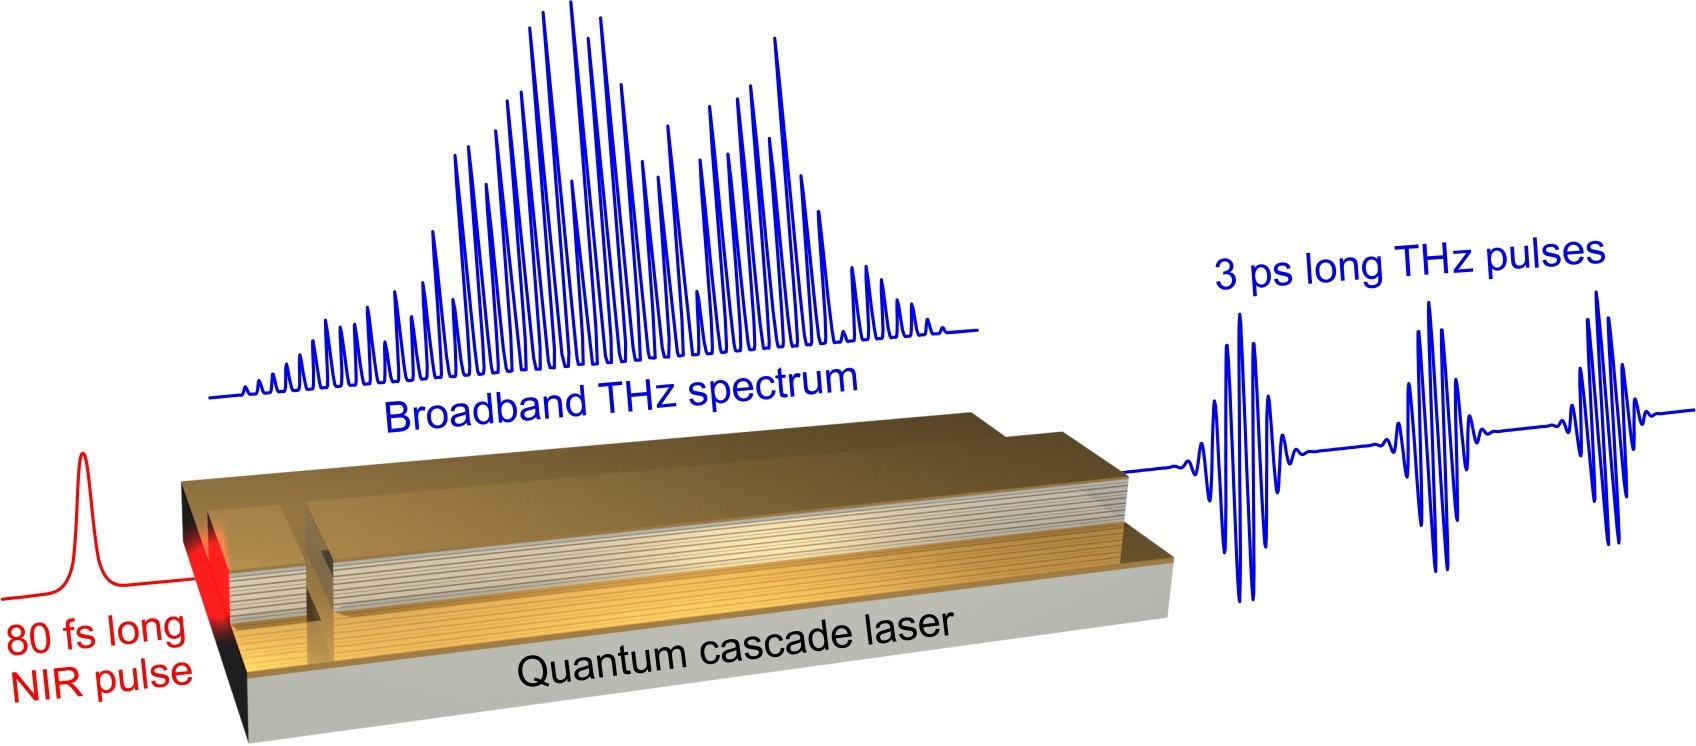 Illustration of a broadband terahertz amplifier based on a quantum cascade laser